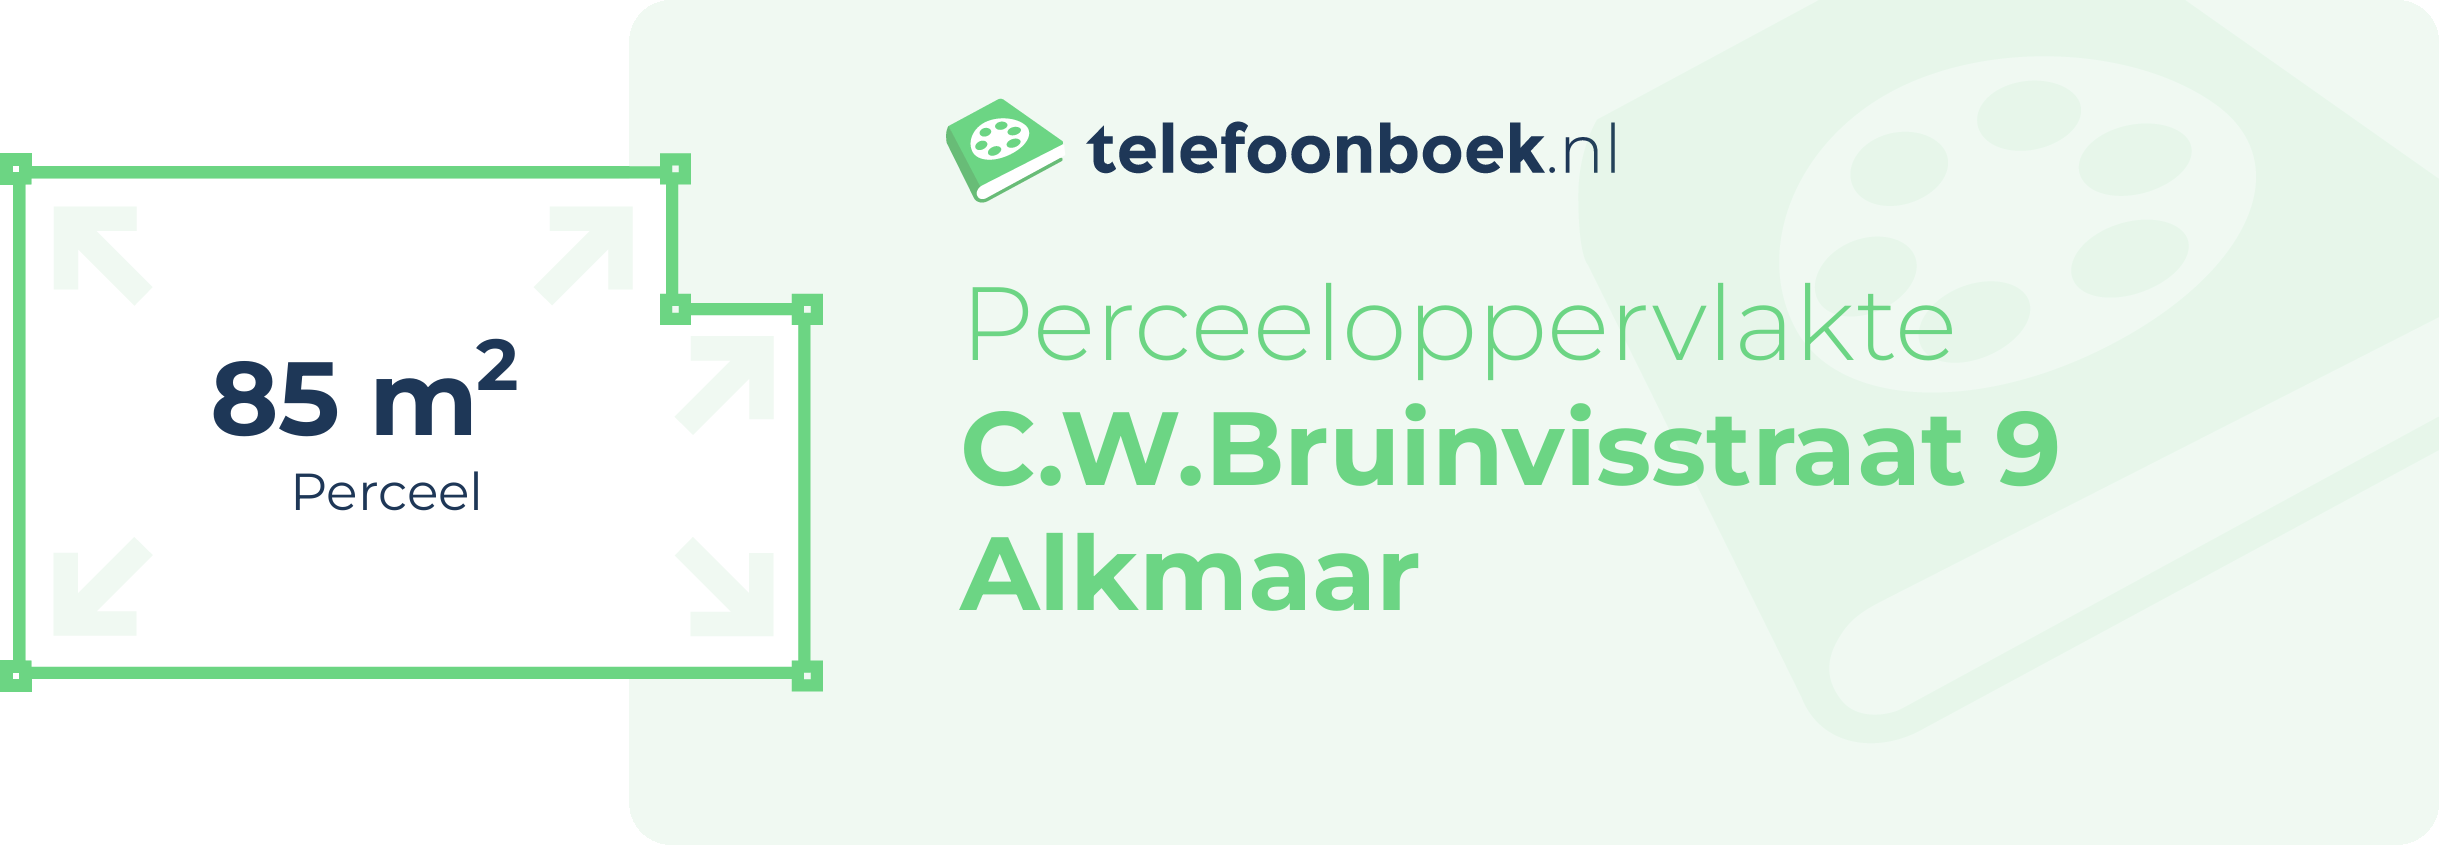 Perceeloppervlakte C.W.Bruinvisstraat 9 Alkmaar